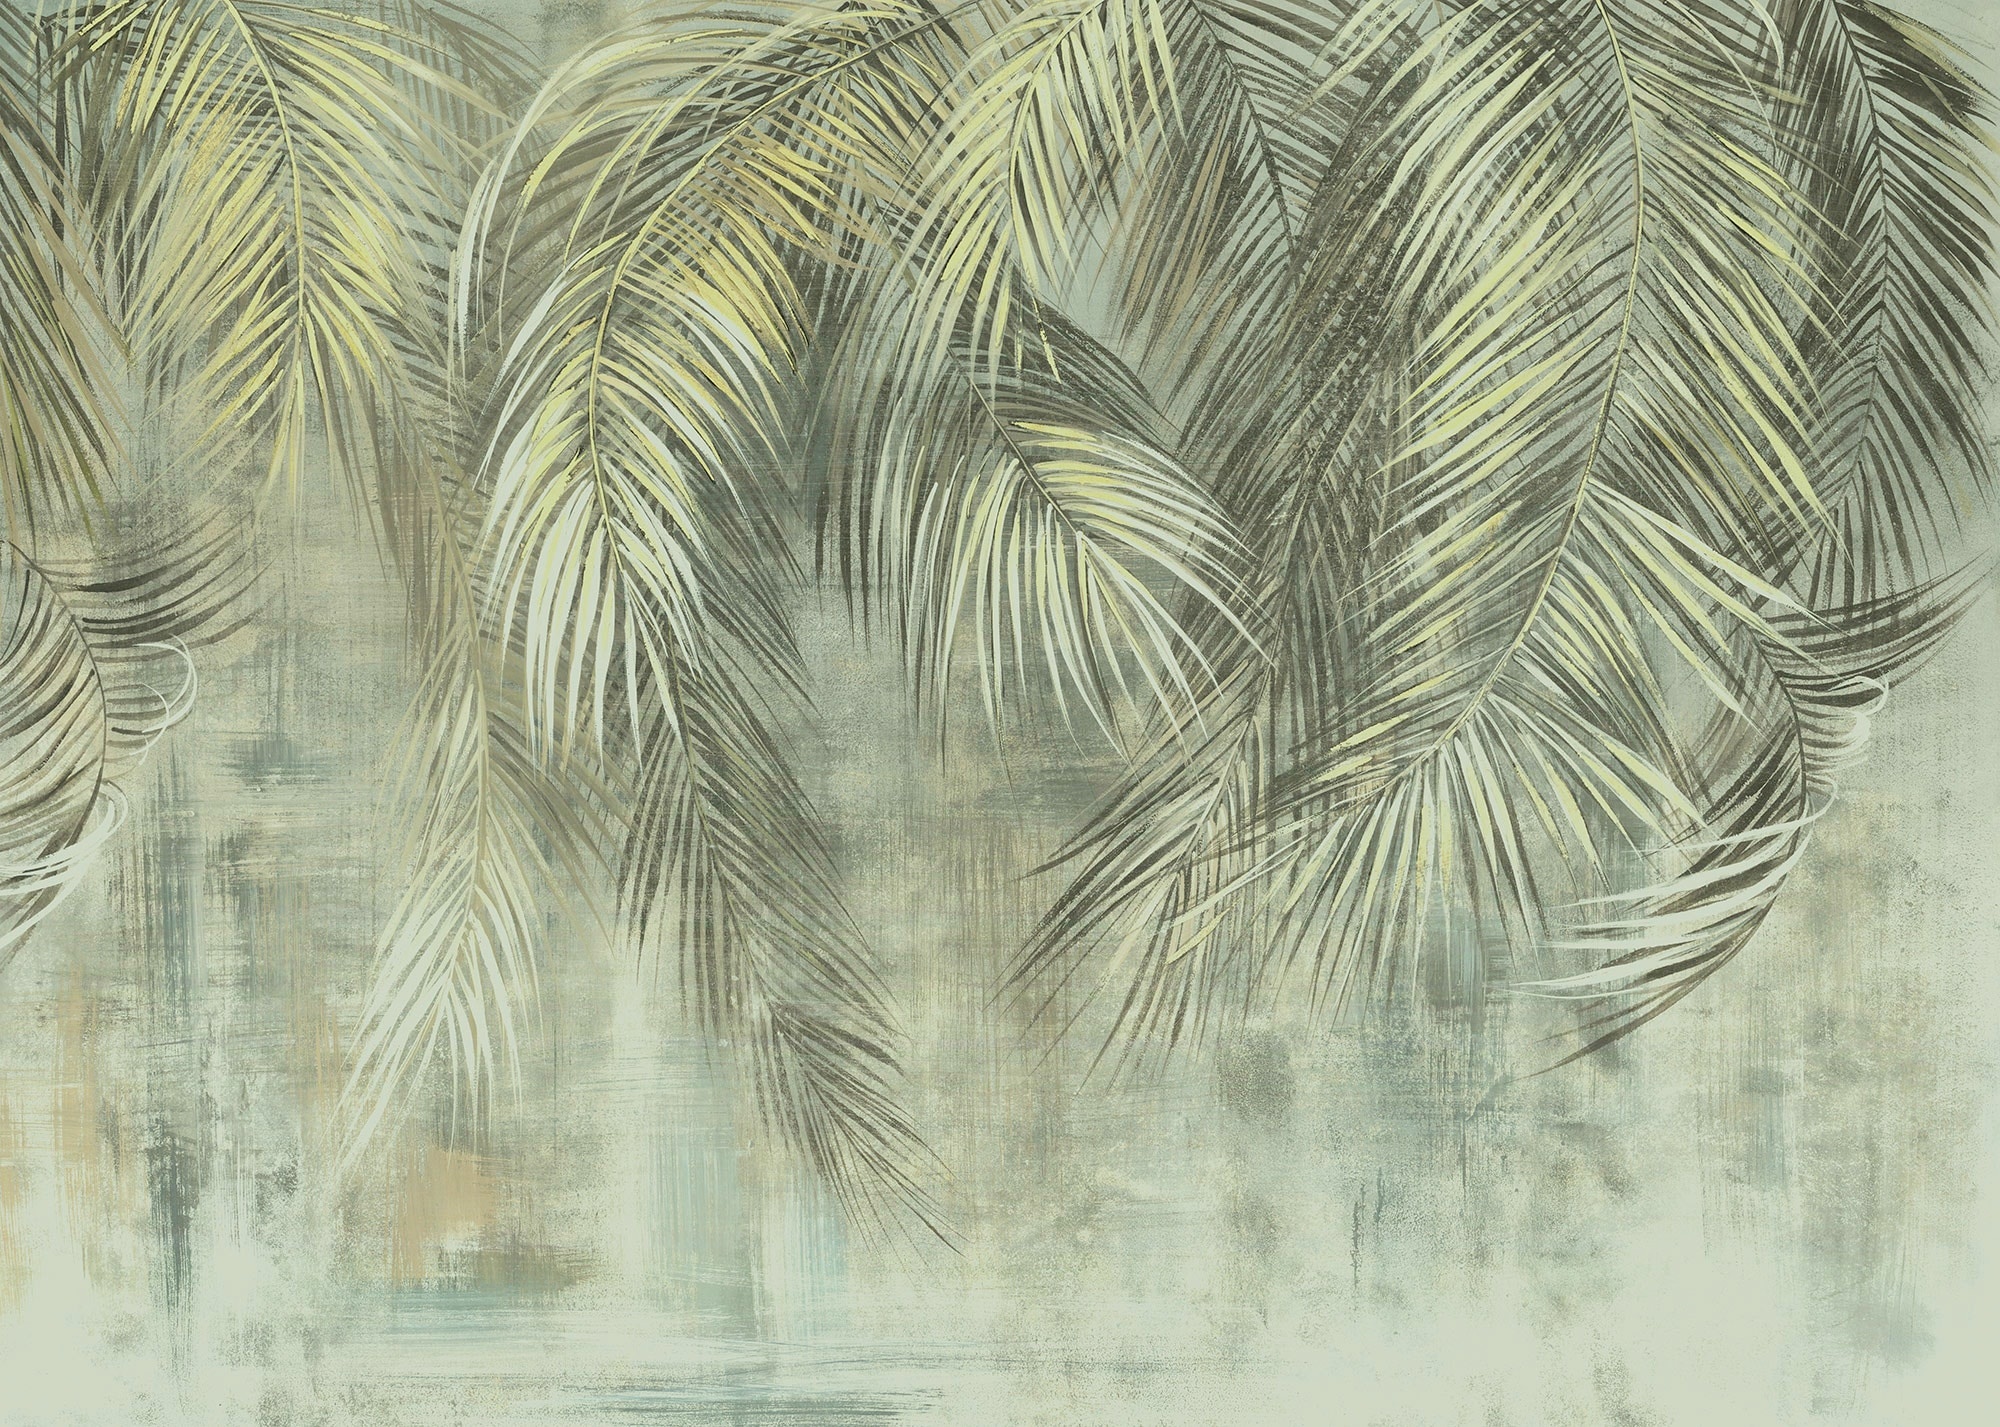 KOMAR Vliestapete "Palm Fronds" Tapeten Gr. B/L: 350 m x 250 m, Rollen: 1 St., bunt (grün, blau, weiß) Blumentapeten